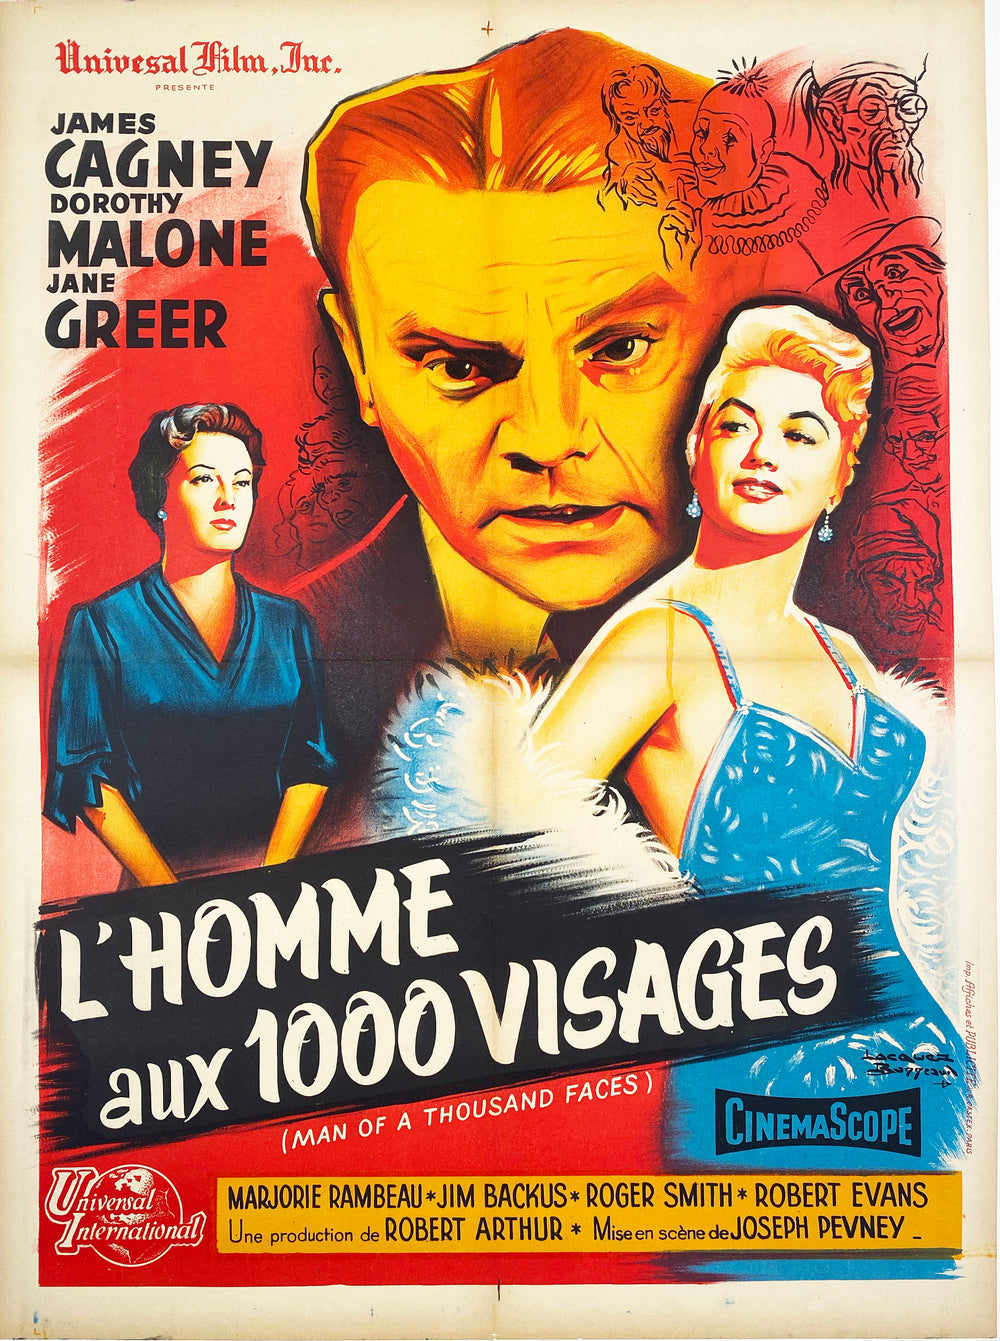 Man of a Thousand Faces (L'Homme aux 1000 visages) - Vintage French Film poster